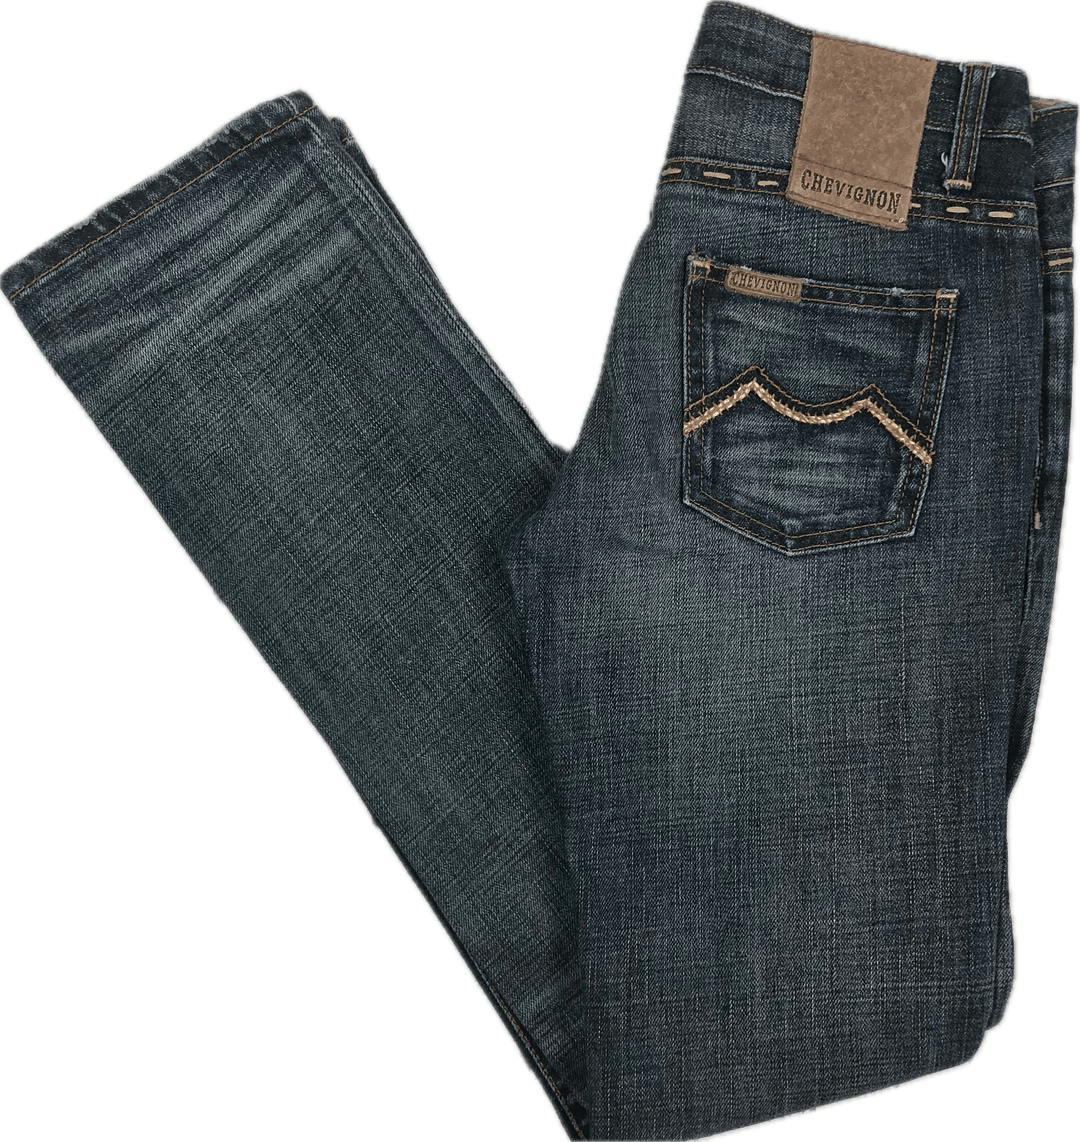 Chevignon Legend Label 'Spot' Jeans- Size 24 - Jean Pool